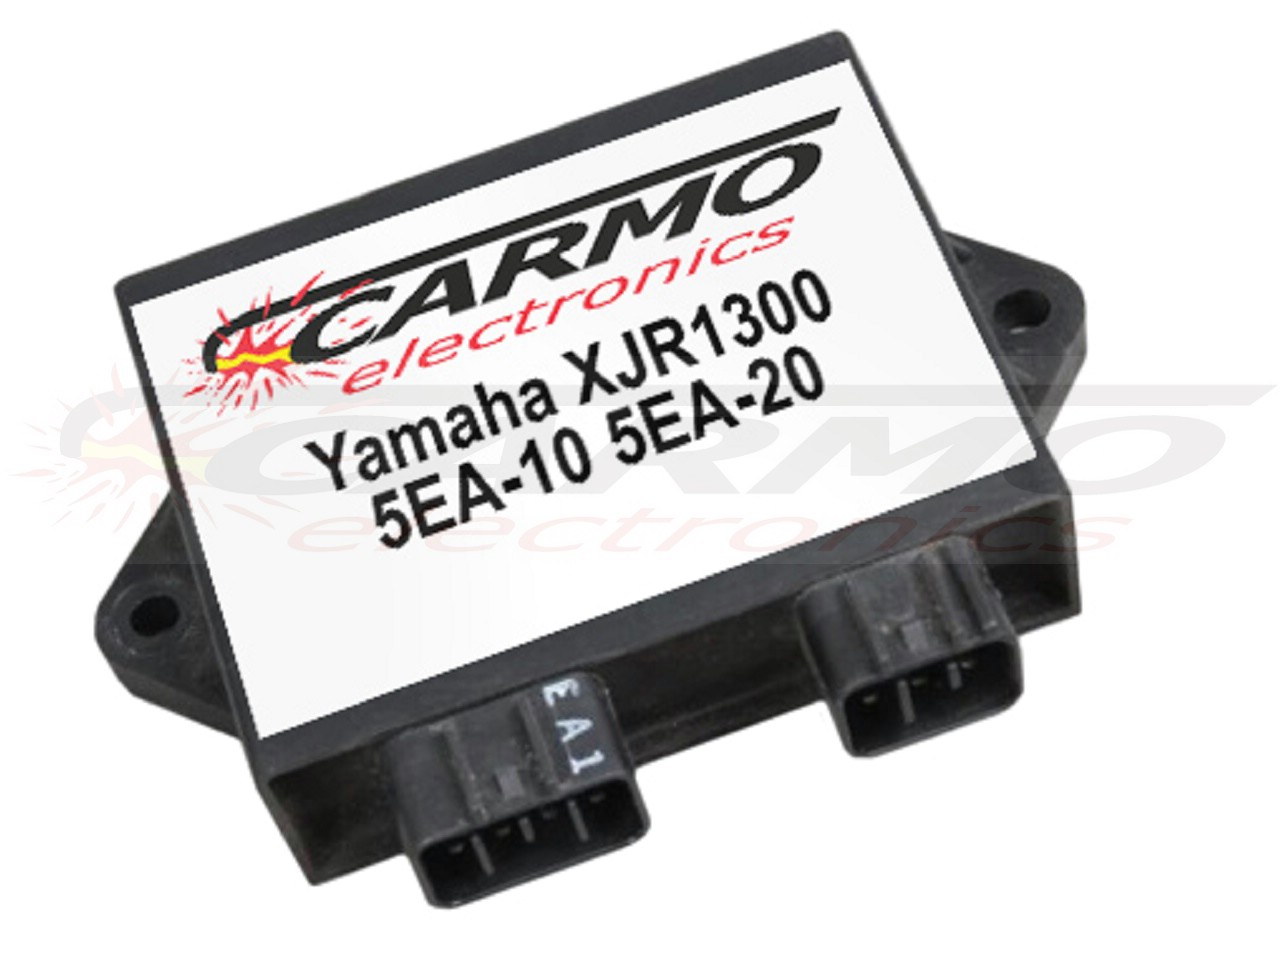 Yamaha XJR1300 SP C racer igniter ignition module CDI TCI Box (5EA-10, 5EA-20) - Click Image to Close